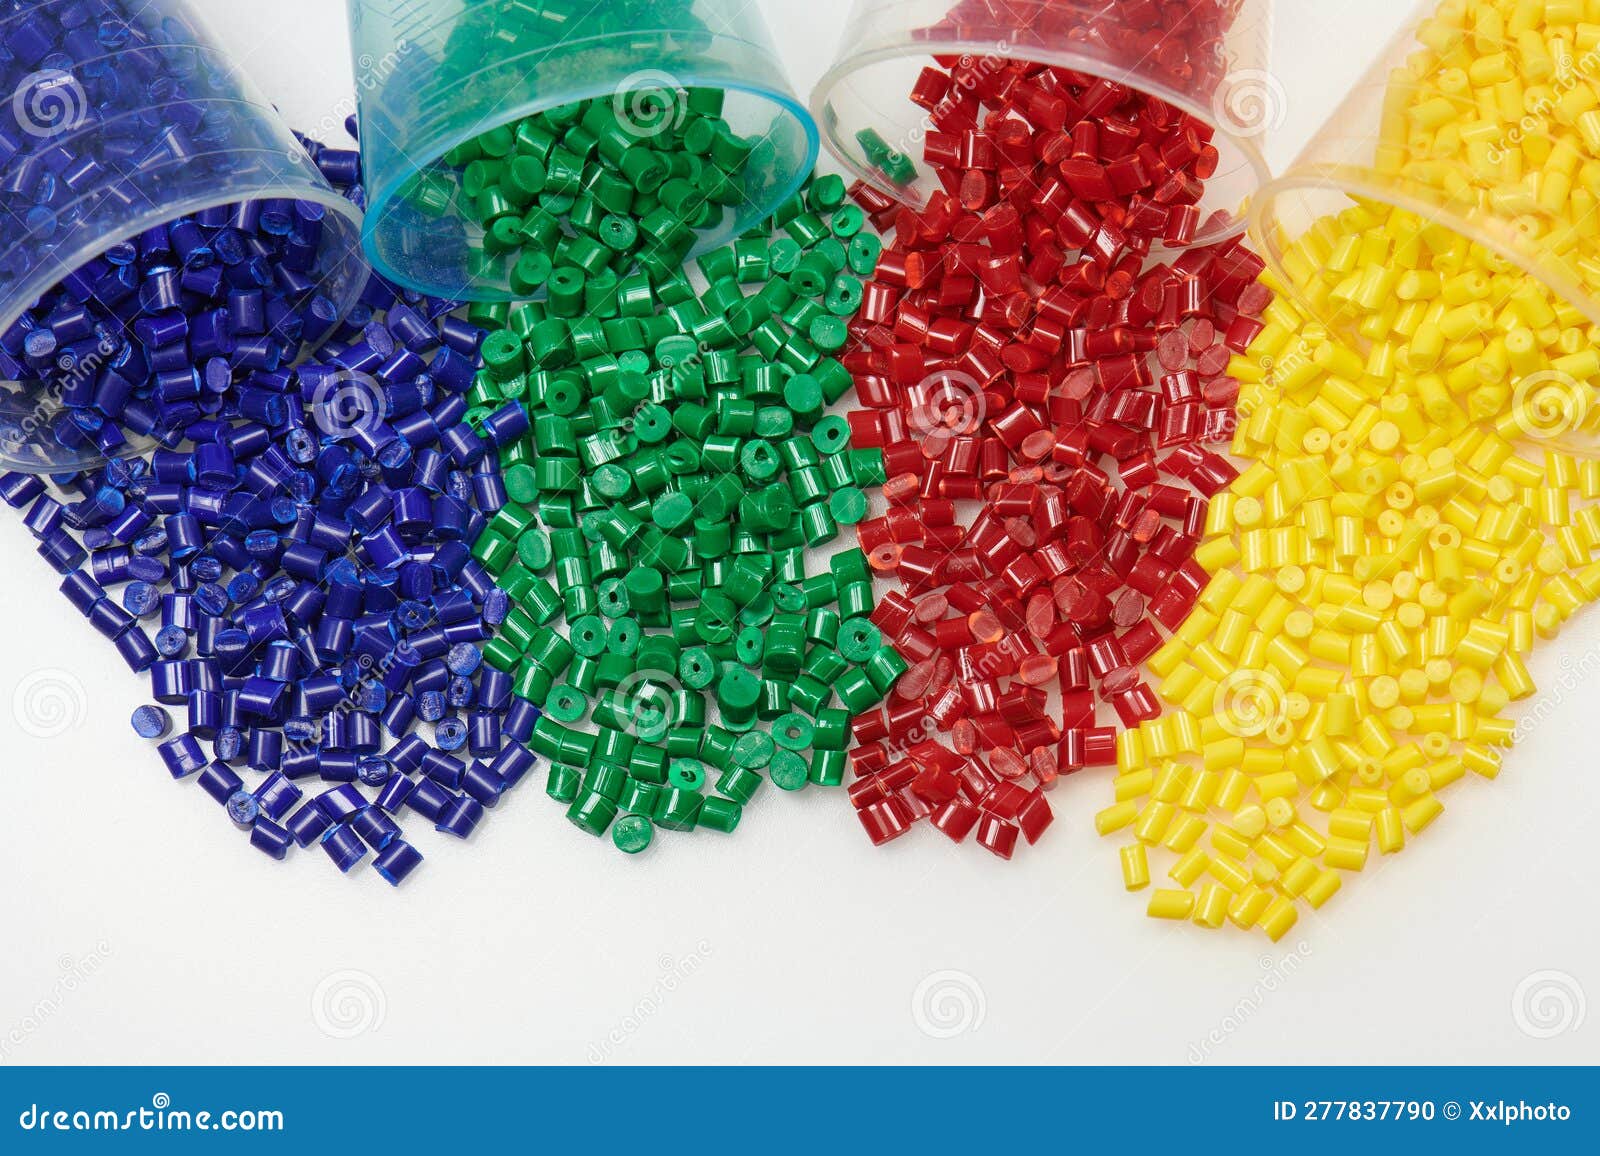 several colored plastic granulate resins laboratory